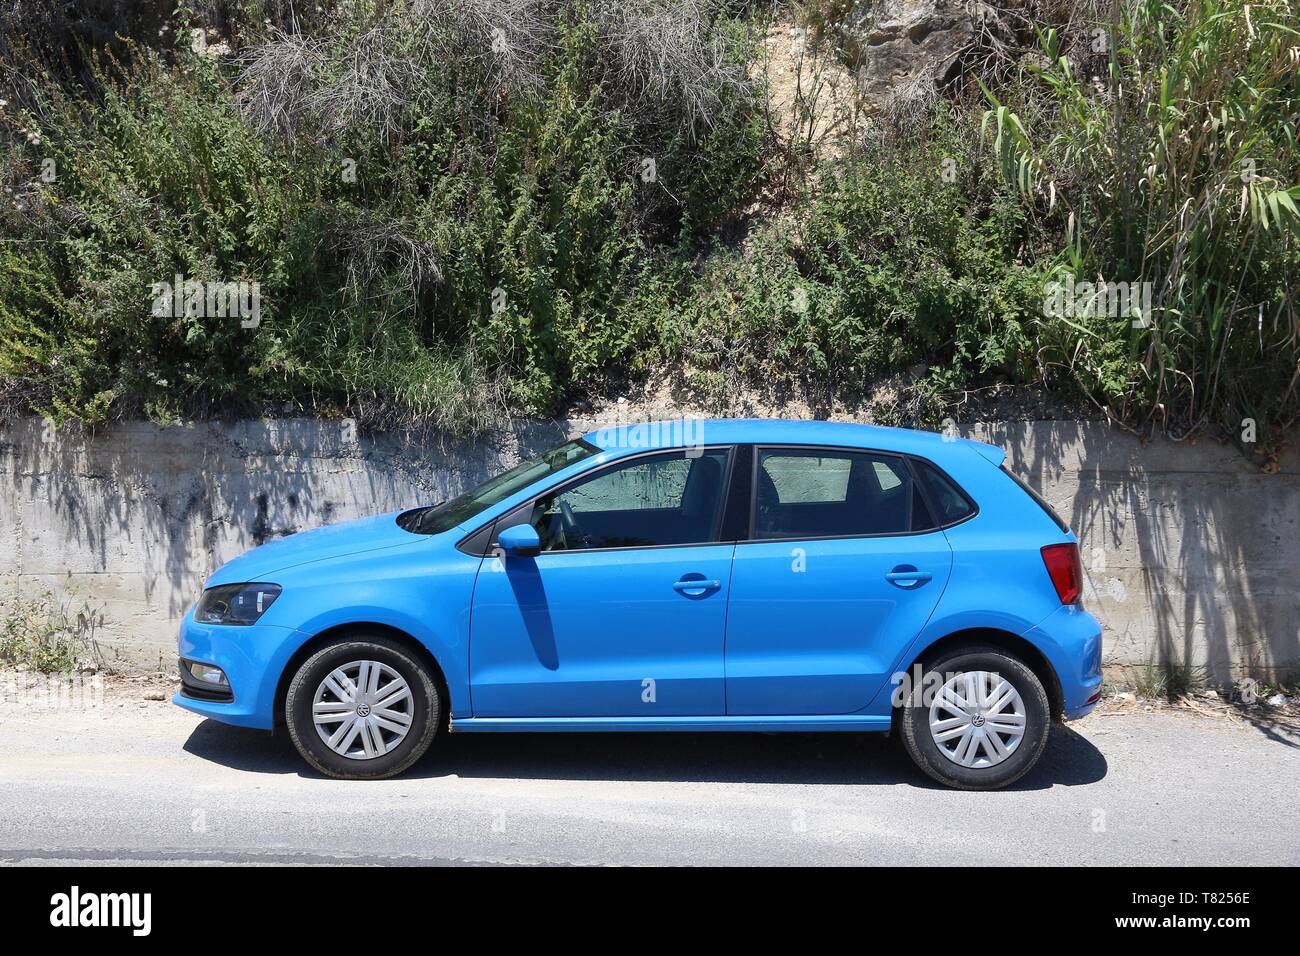 Haarvaten Spreek uit acre CORFU, GREECE - JUNE 2, 2016: VW Polo blue hatchback car parked in Corfu  Island, Greece. With 566 registered vehicles per 1000 inhabitants Greece is  b Stock Photo - Alamy